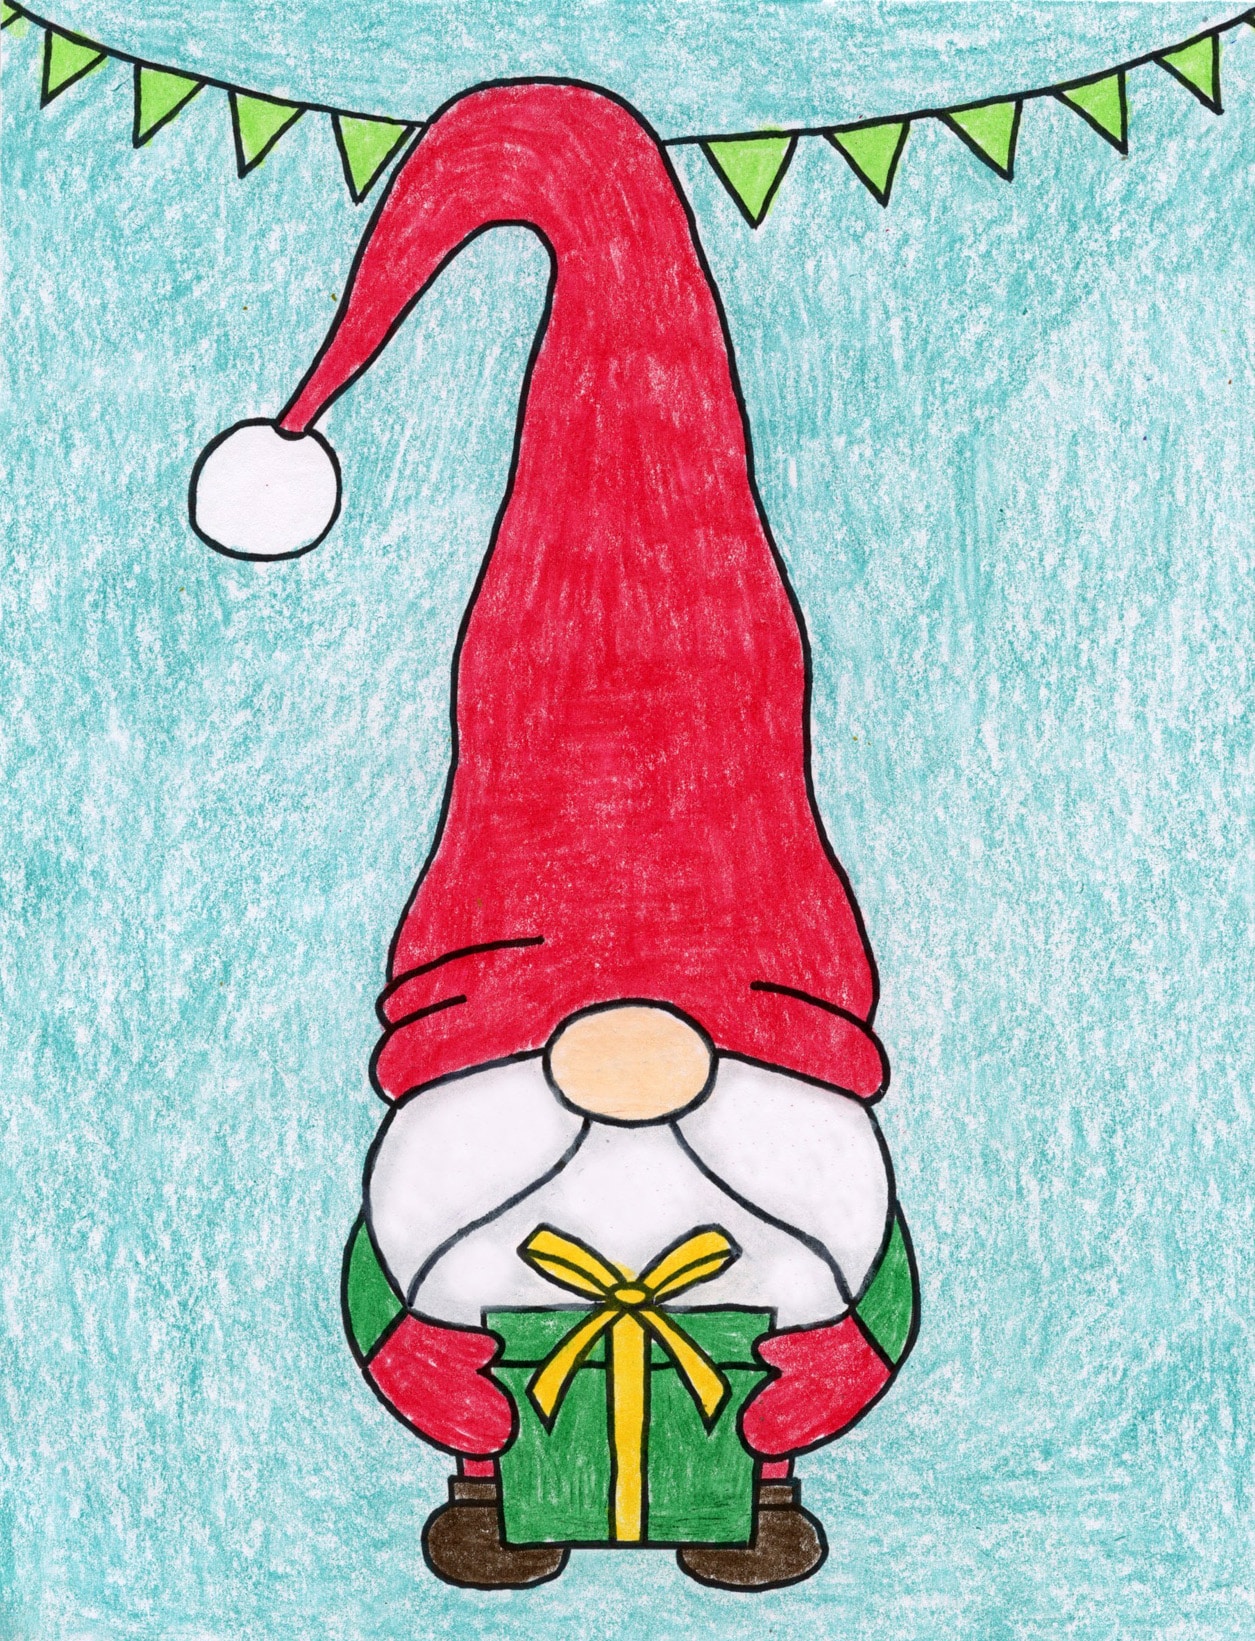 Easy How to Draw a Christmas Gnome Tutorial and Christmas Gnome ...